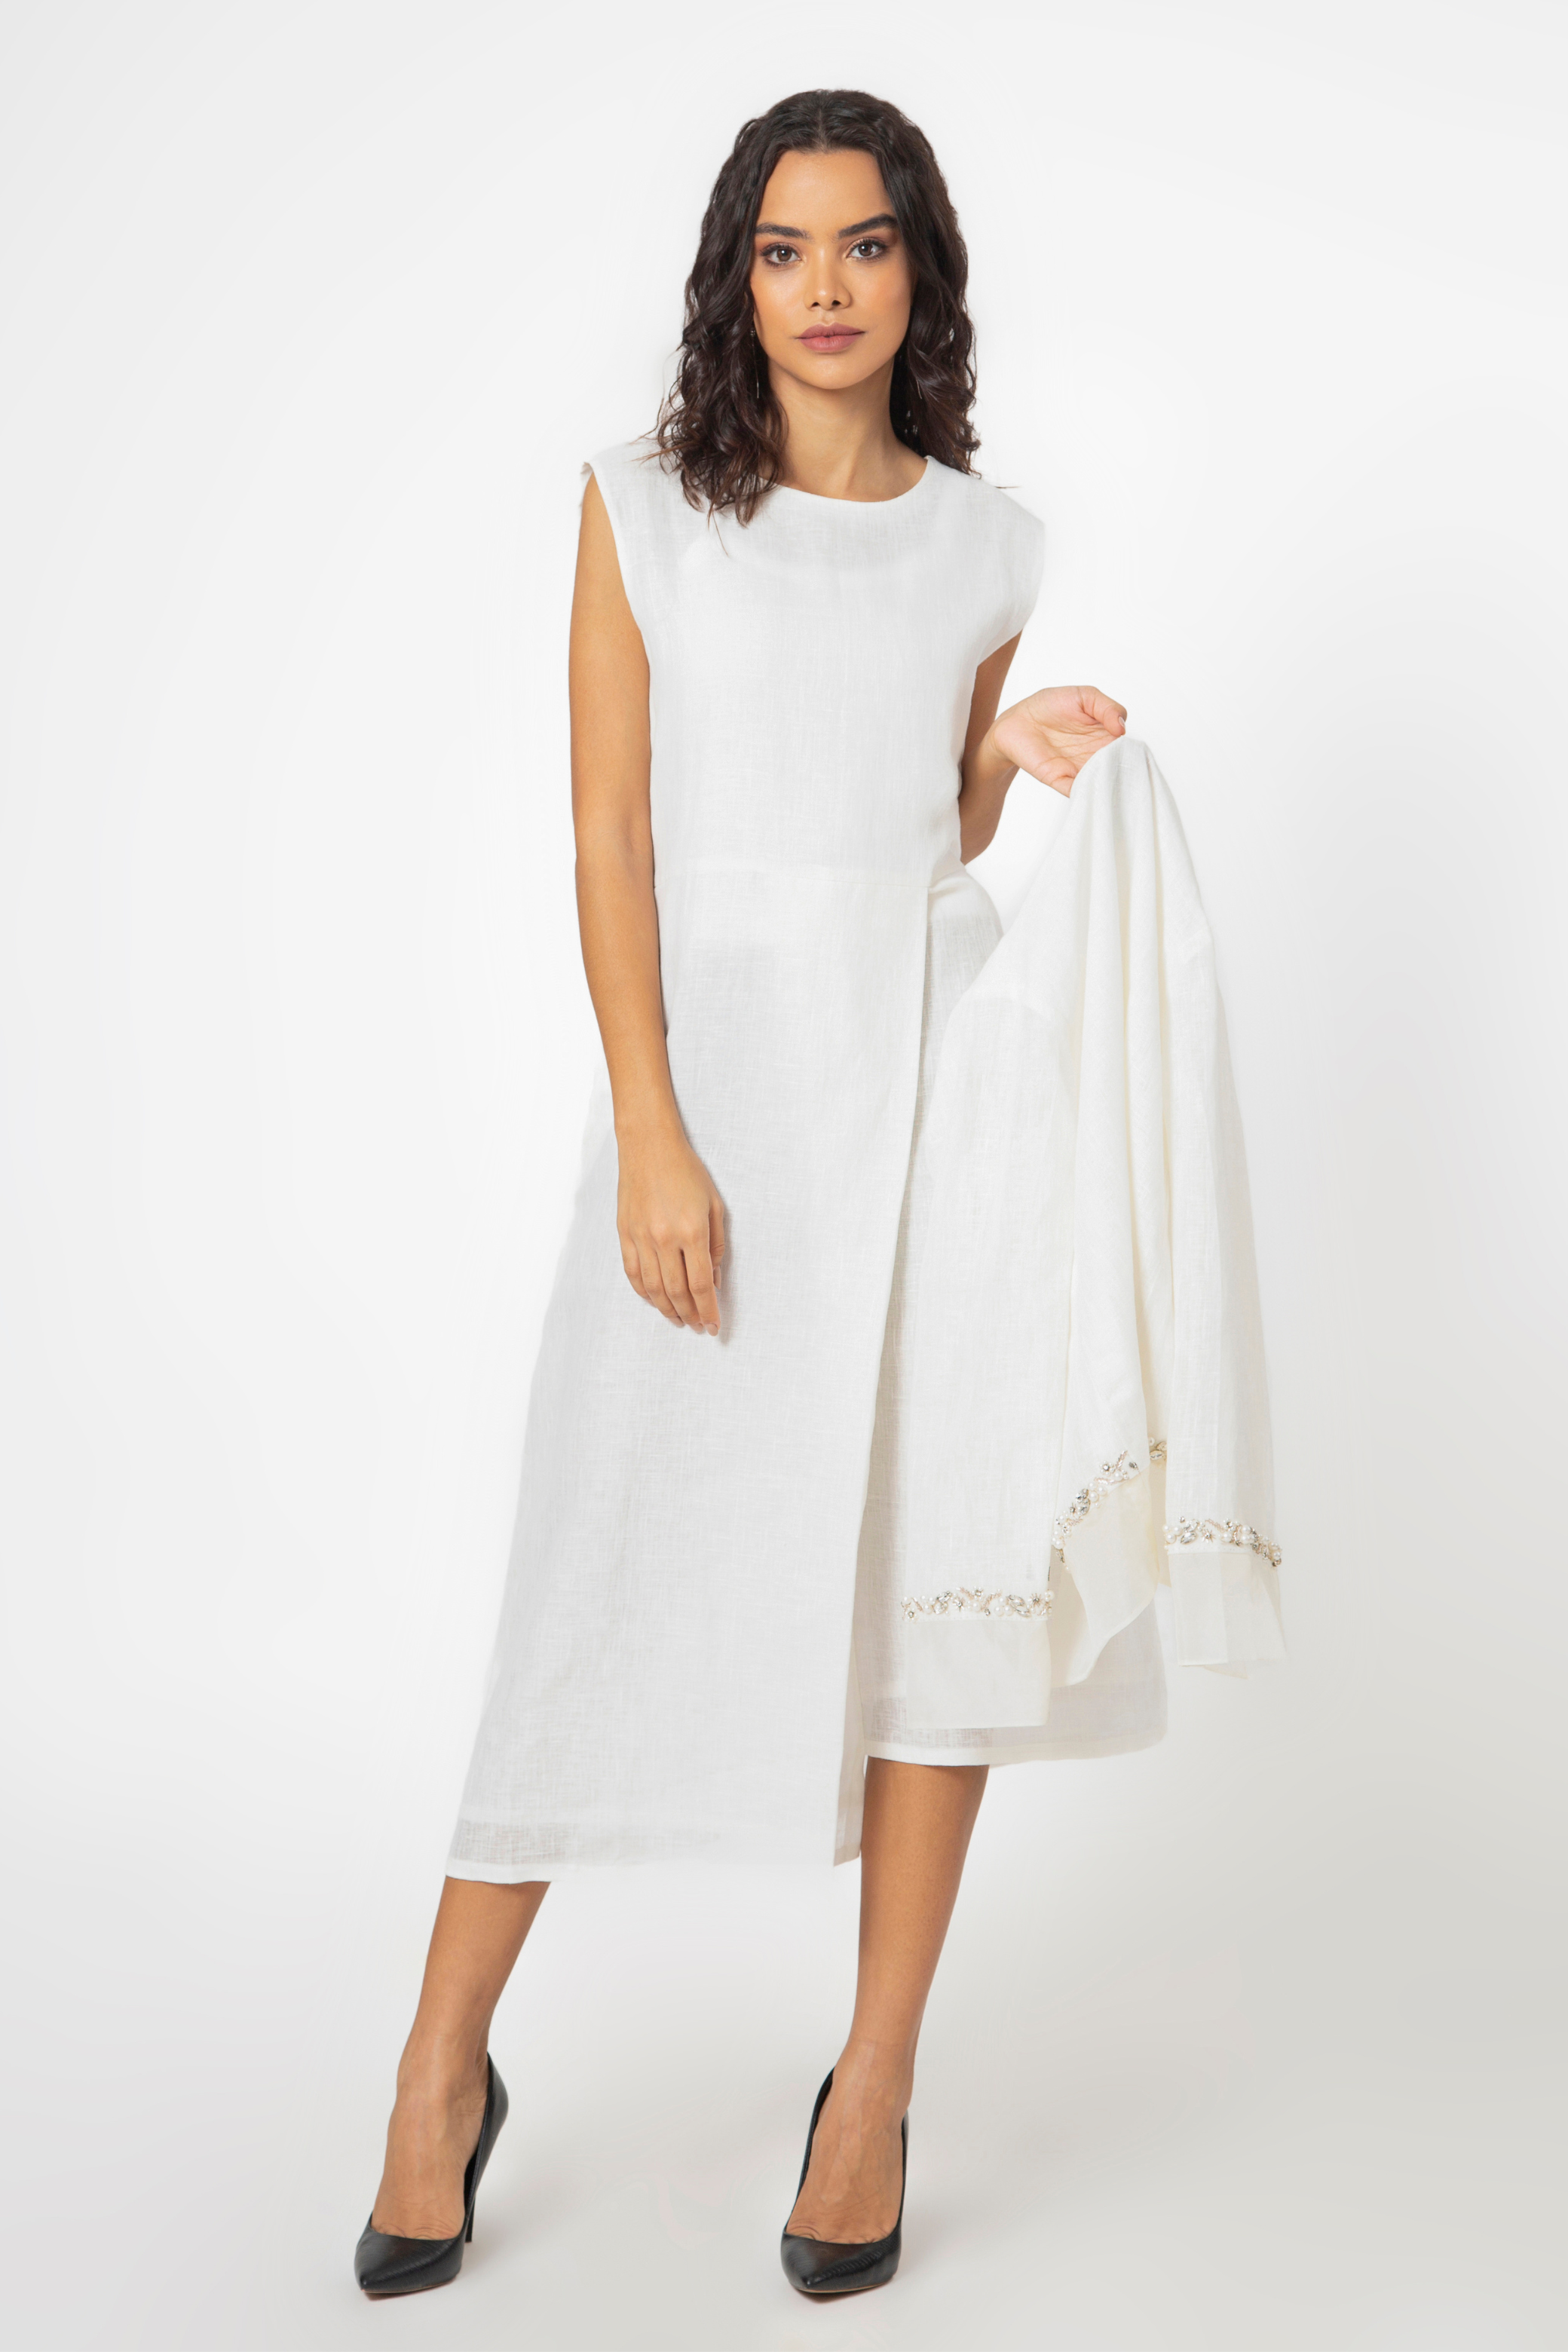 Buy White Dress 